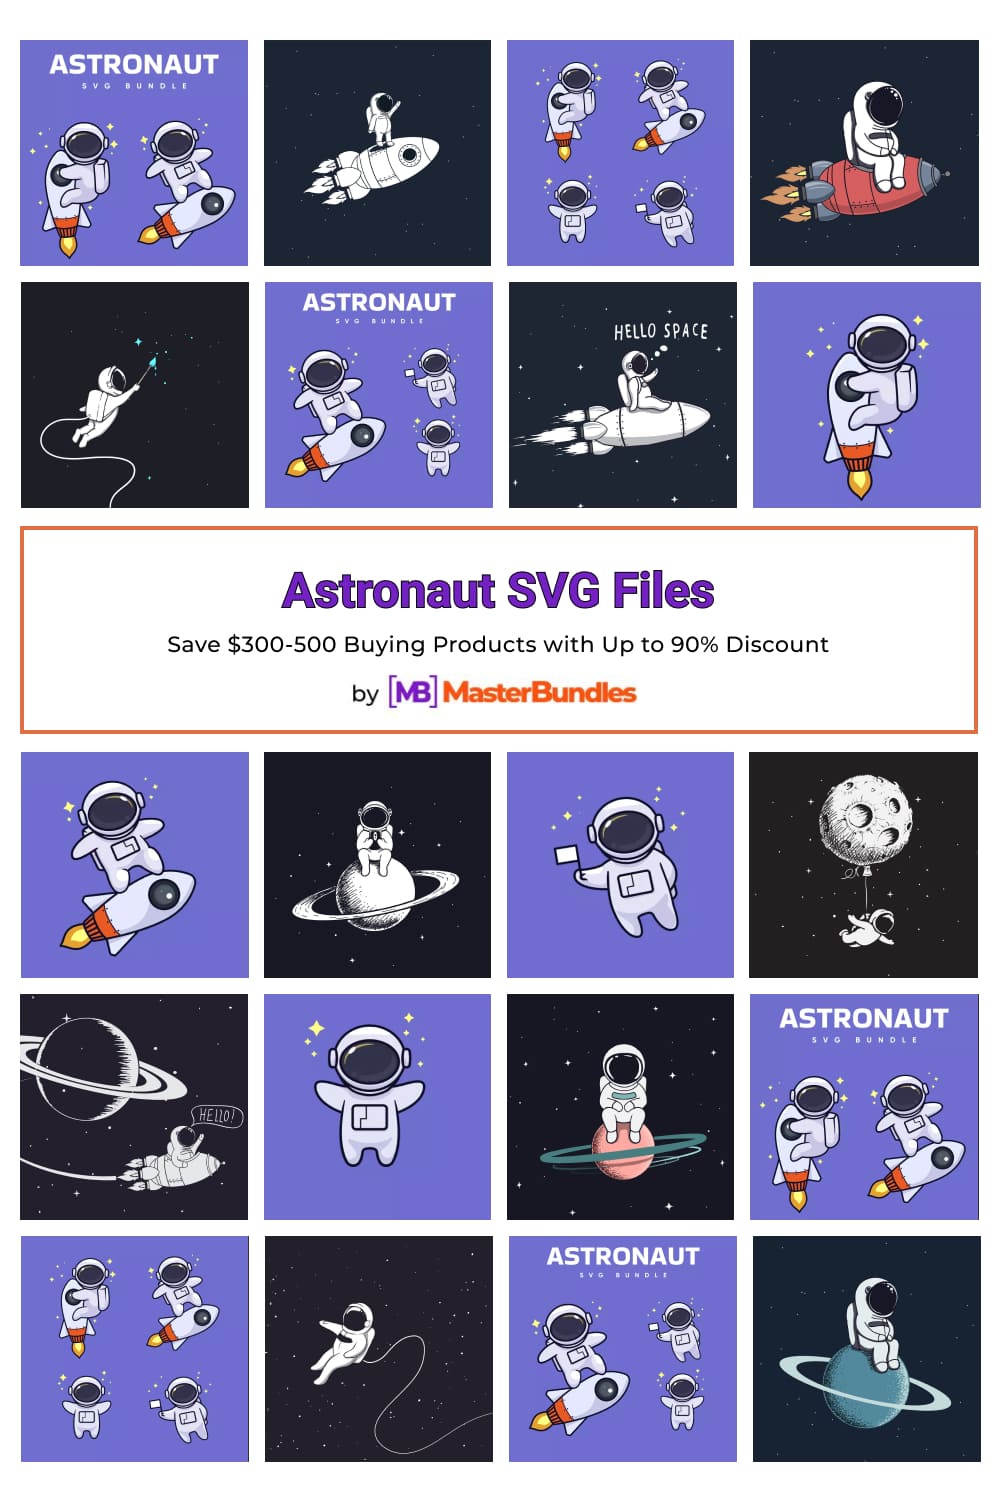 Astronaut SVG Files Pinterest image.